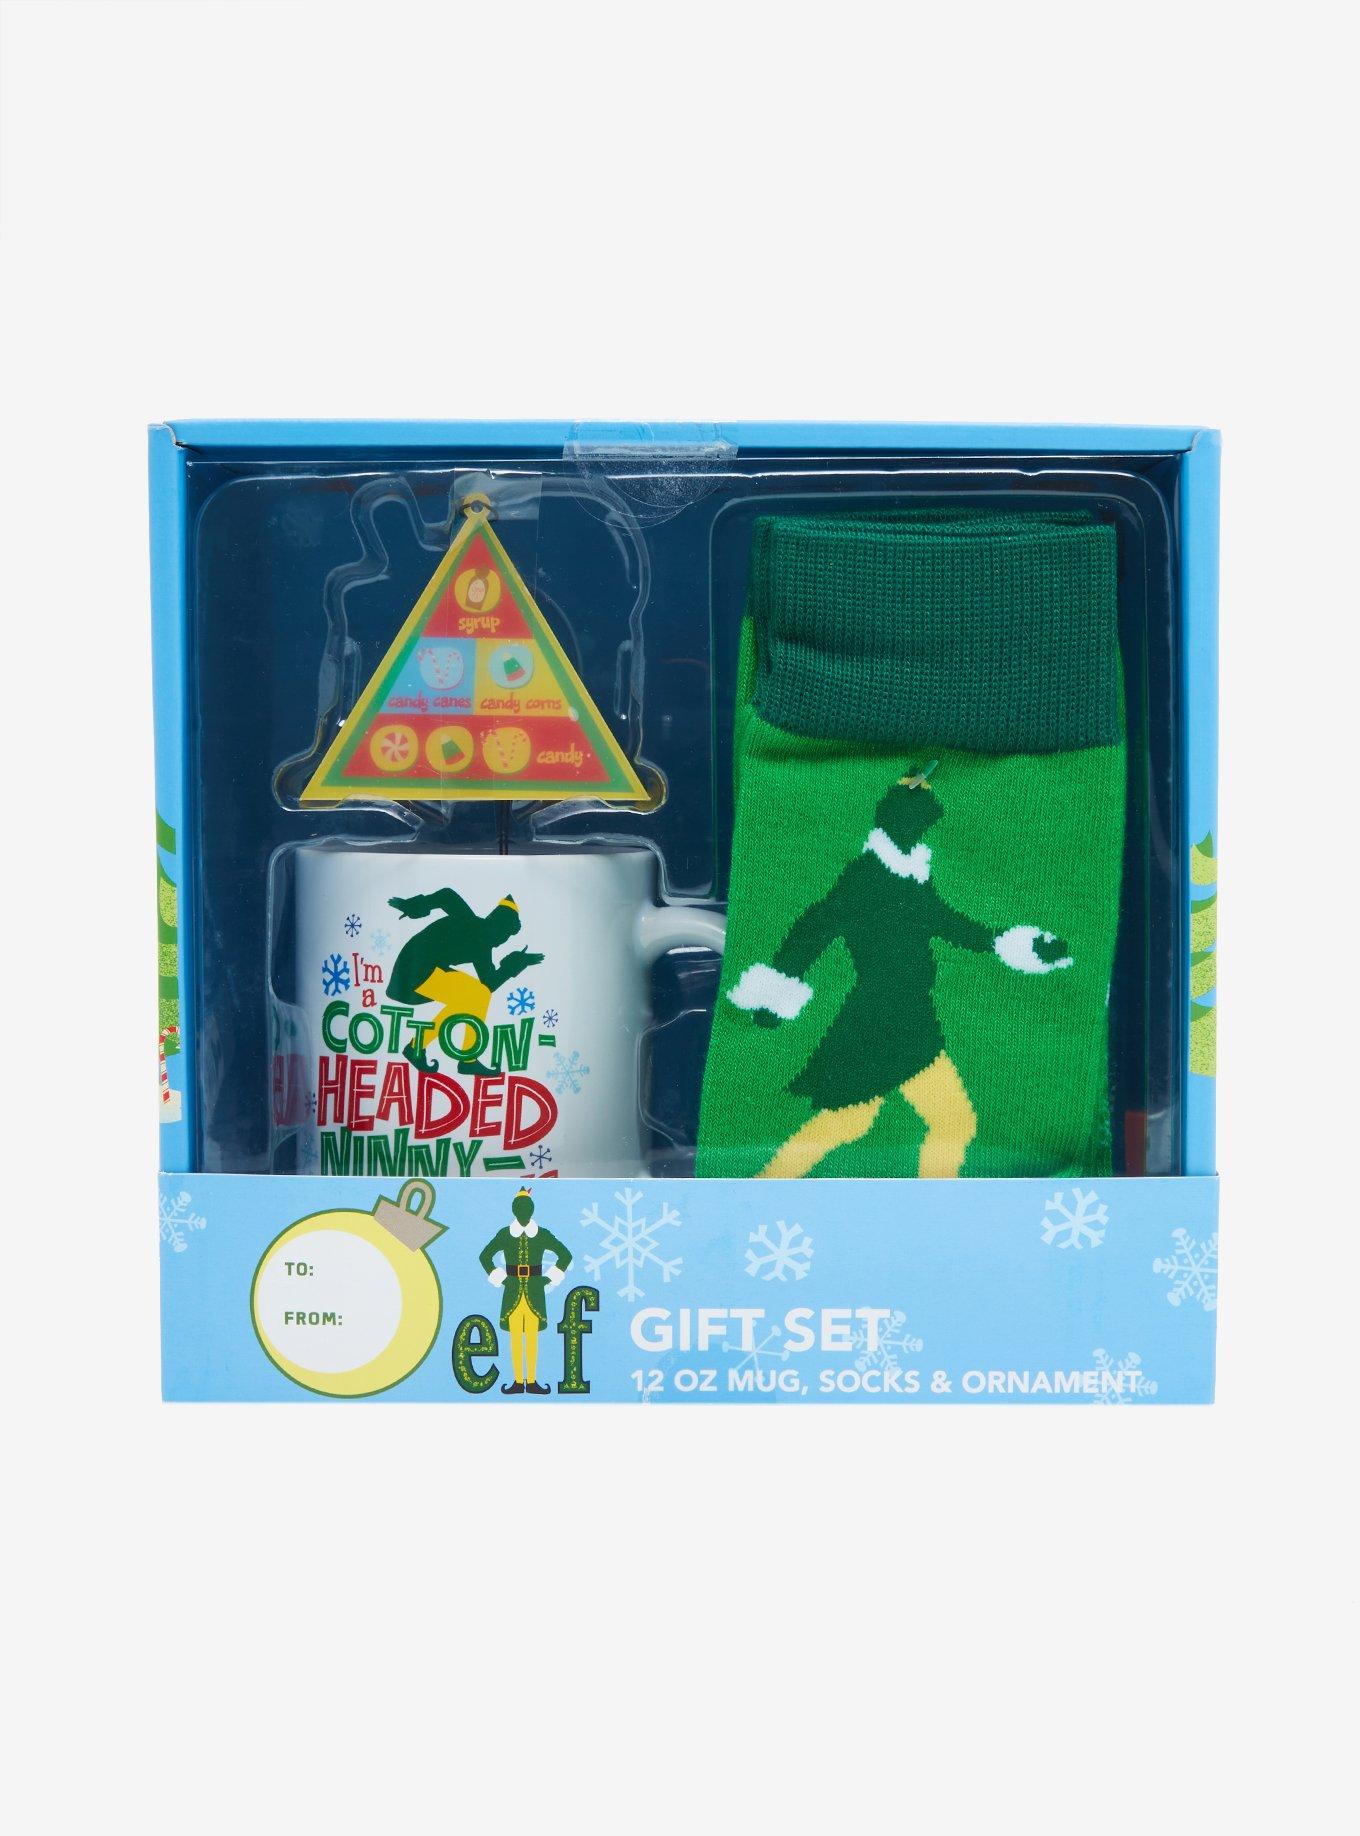 Elf Buddy the Elf Mug, Socks, and Ornament Gift Set